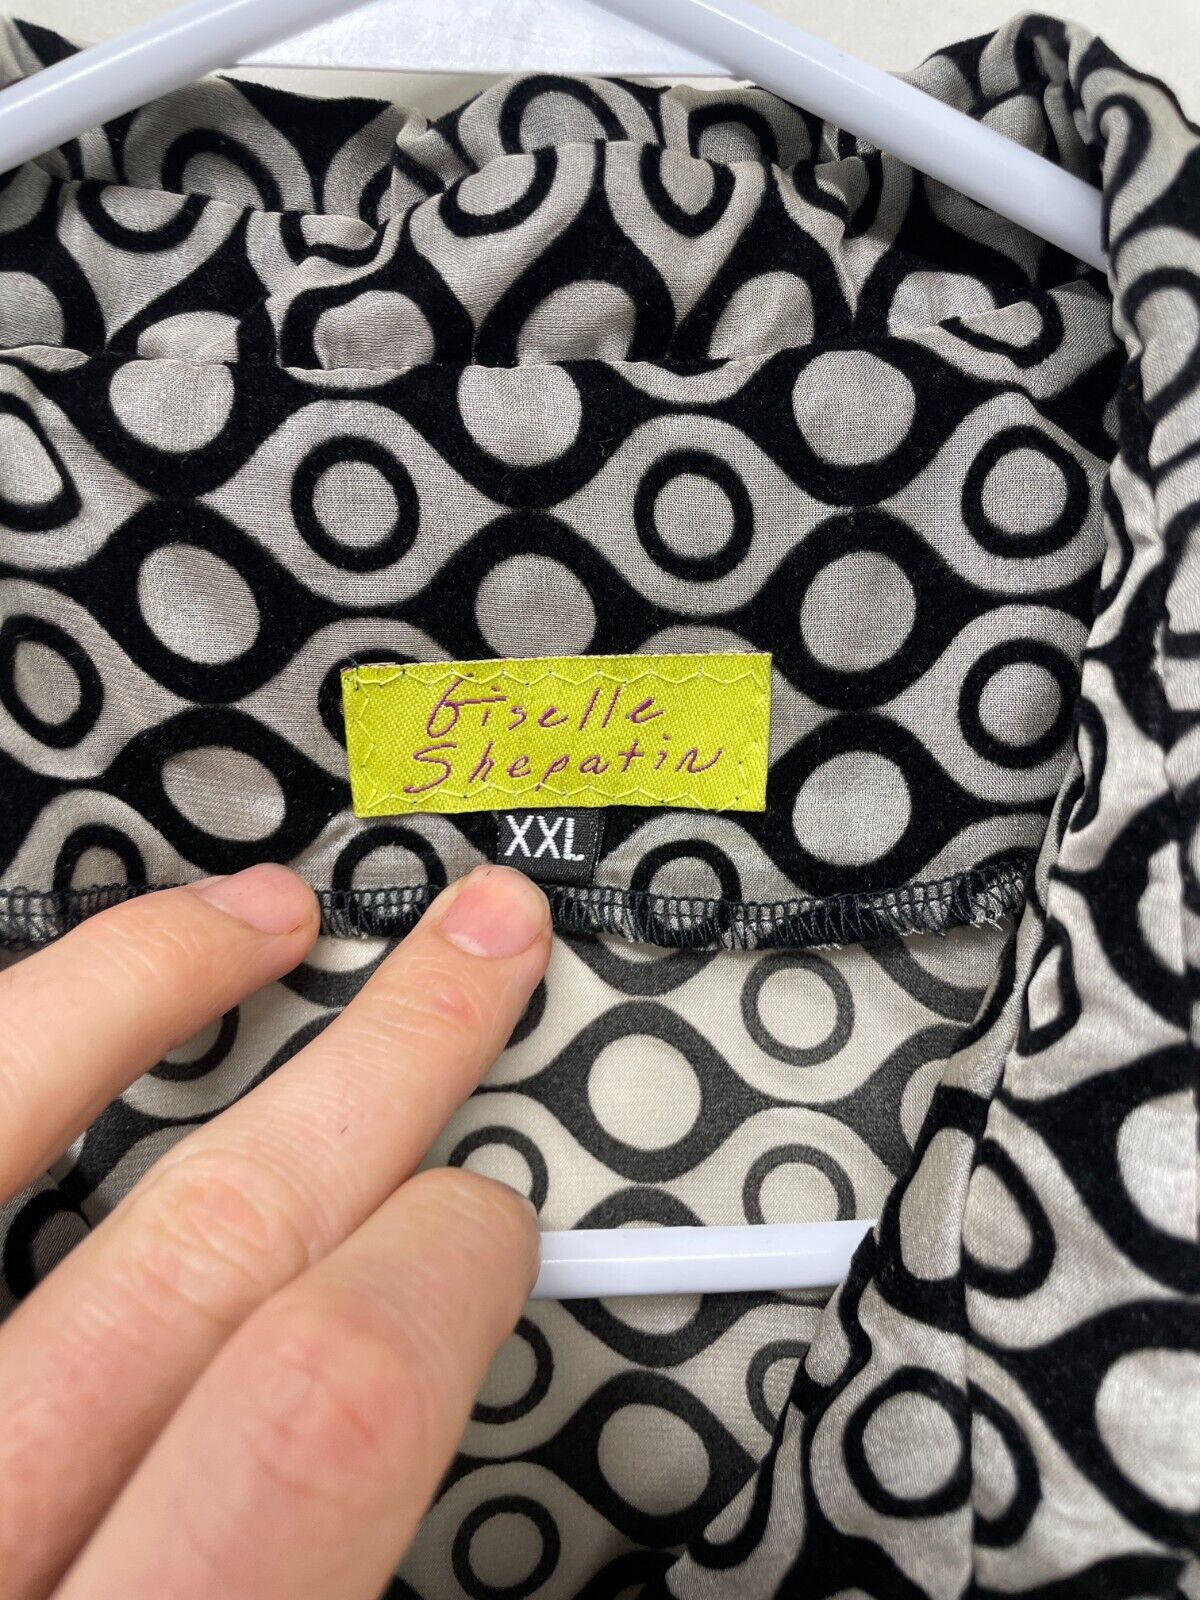 Giselle Shepatin Womens XXL Mini Shirt Dress Black Button Front Oversized